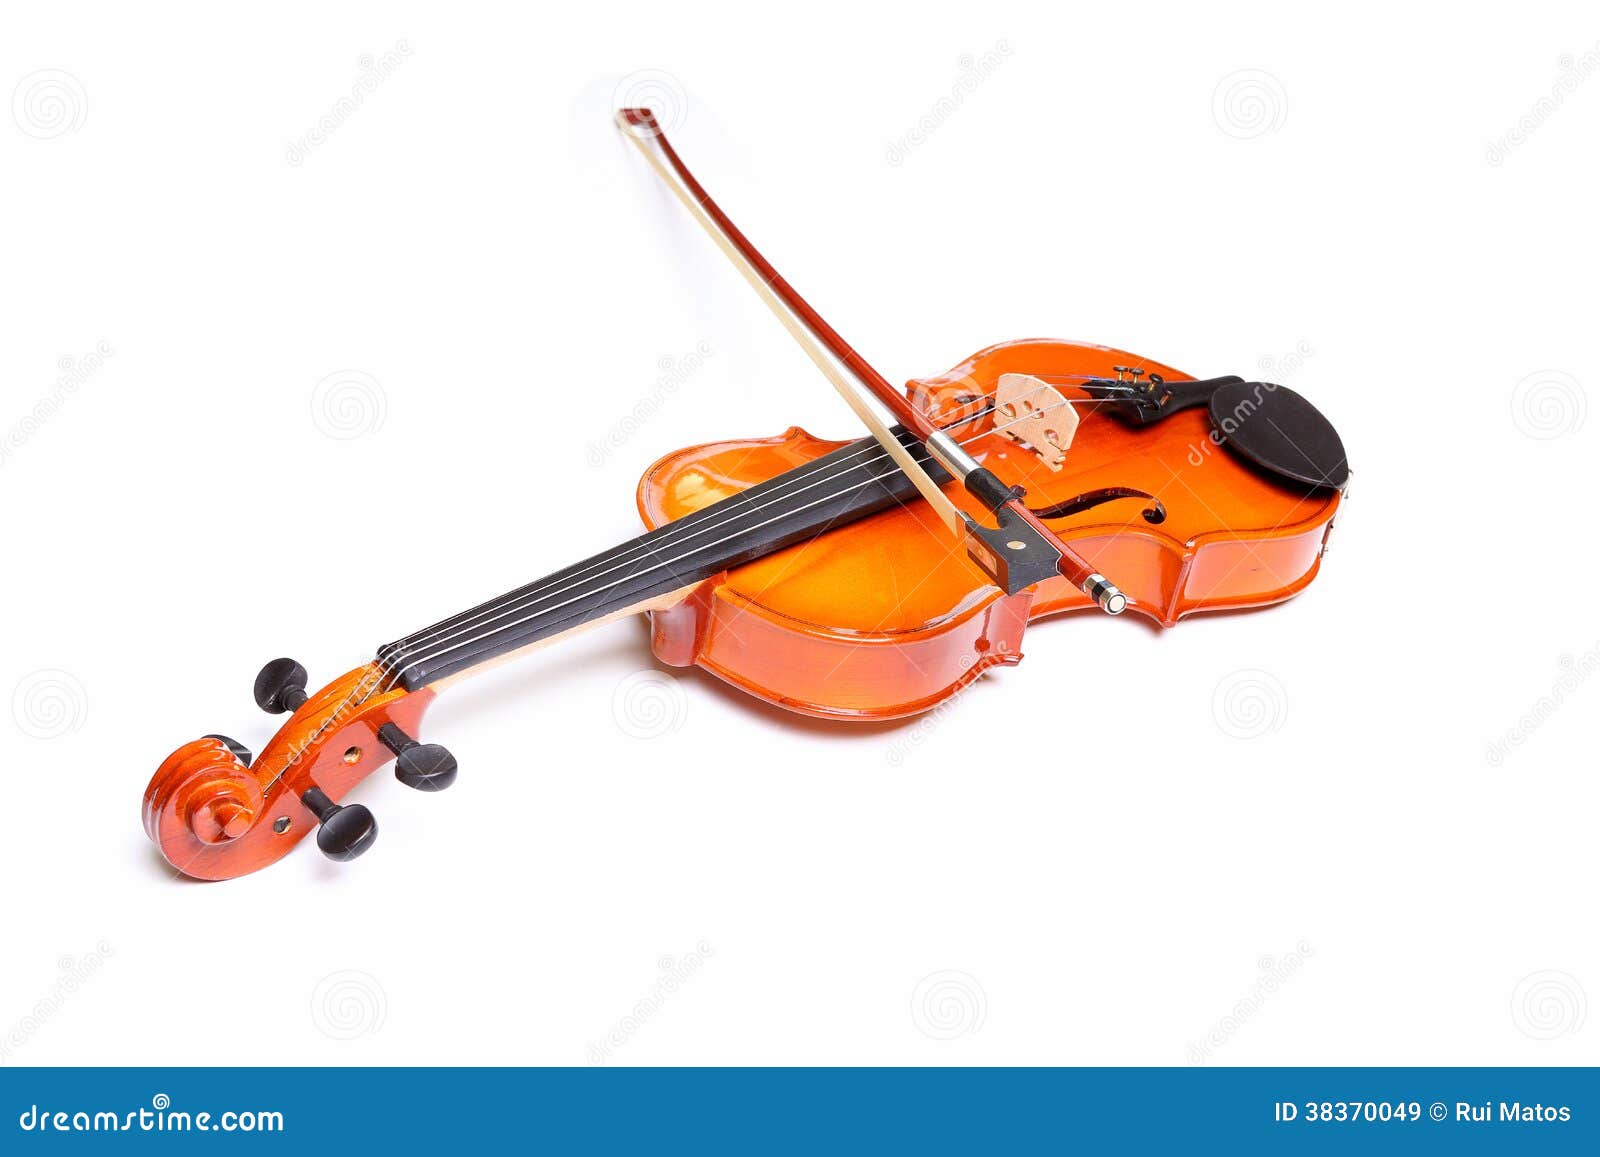 46 165 Violine Fotos Kostenlose Und Royalty Free Stock Fotos Von Dreamstime